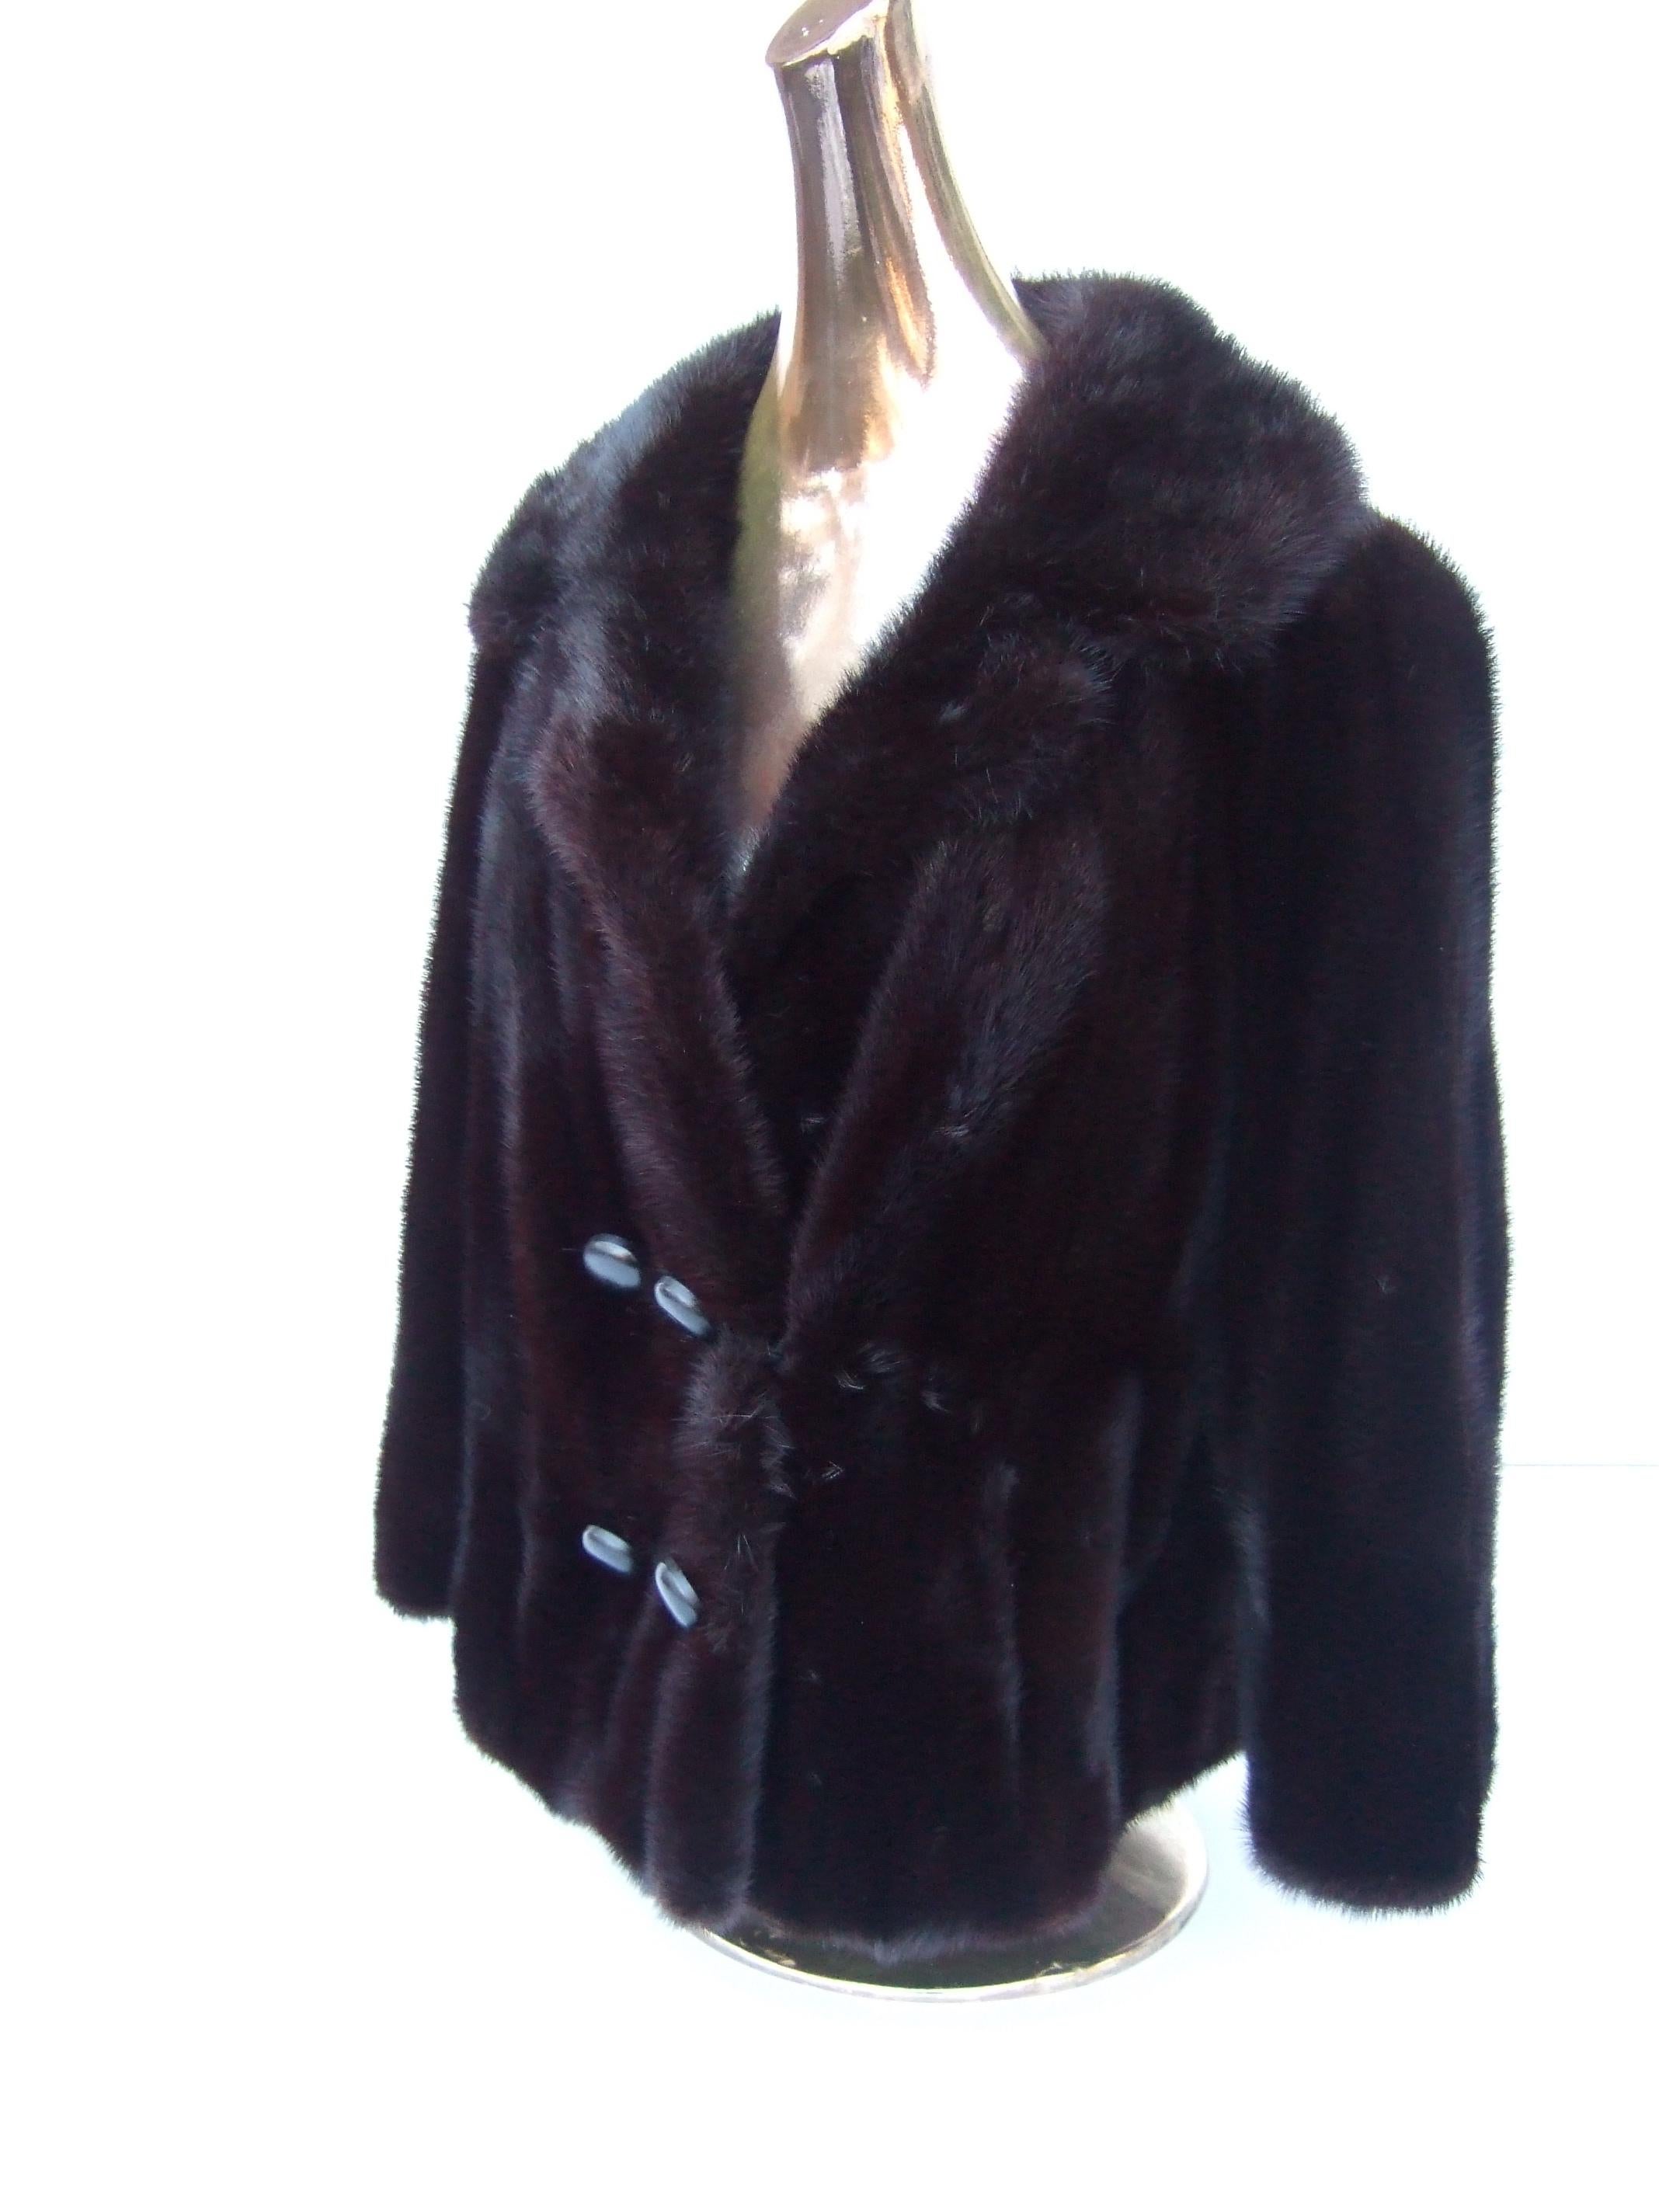 Luxurious Mahogany Plush Dark Brown Mink Fur Jacket by Bill Marre' c 1970s  3